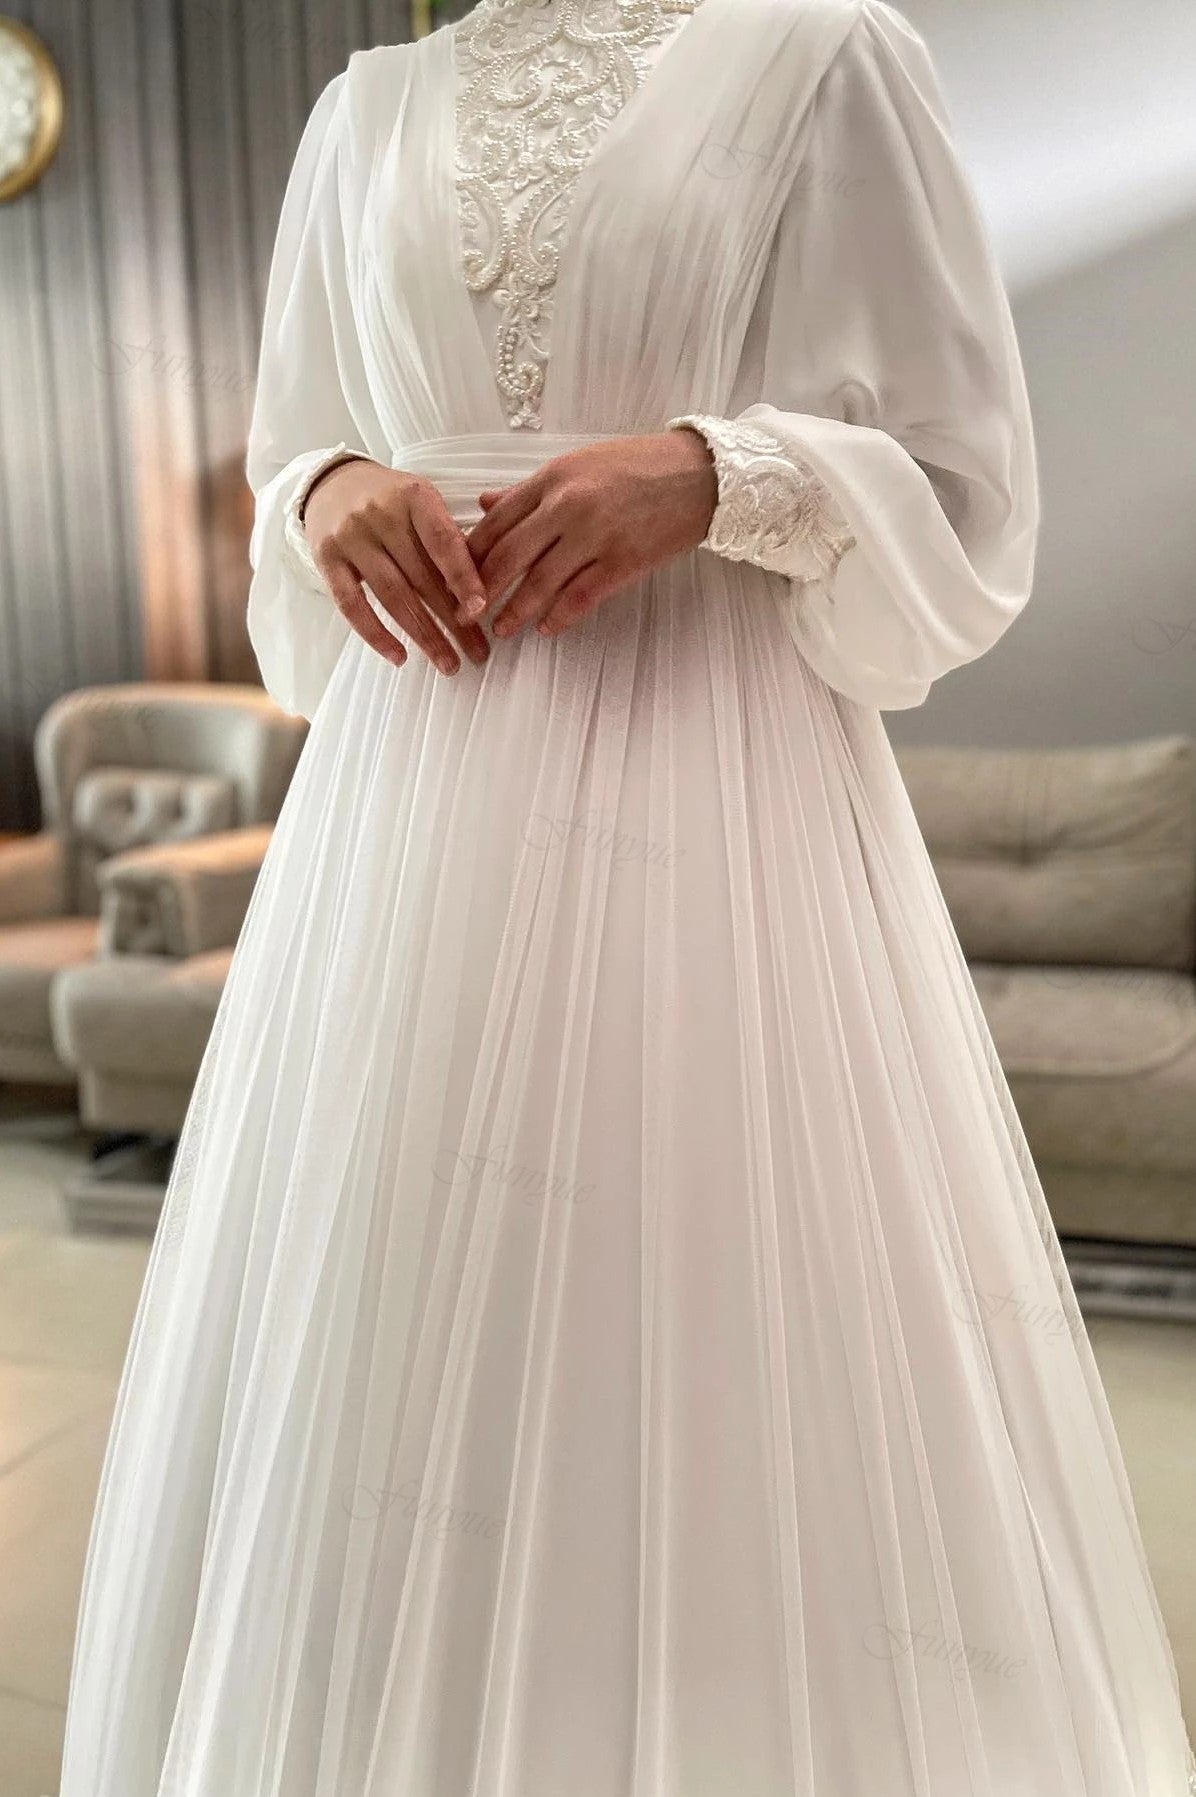 Wedding Dresses by Arab Designers | Arabia Weddings